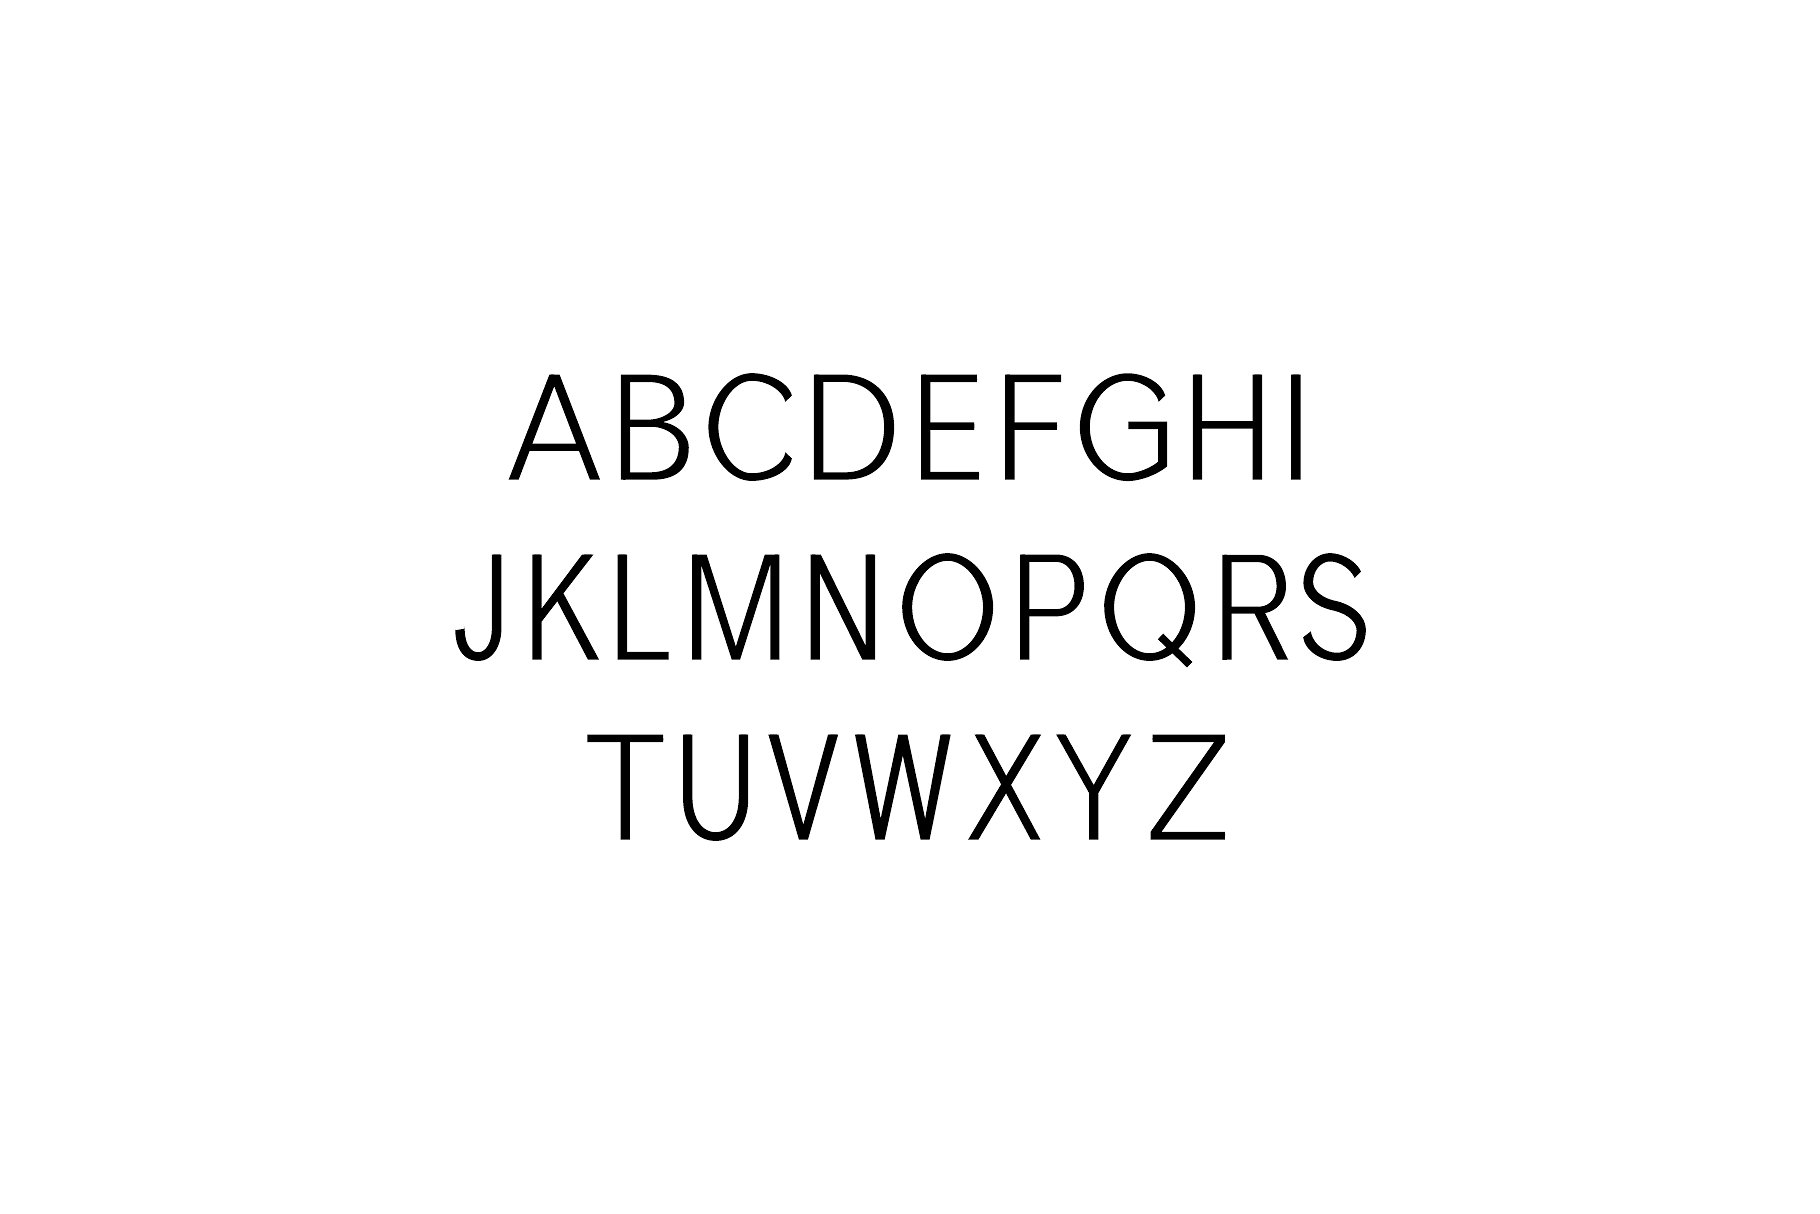 时尚设计字体 Treyton Sans Serif 7 Fo